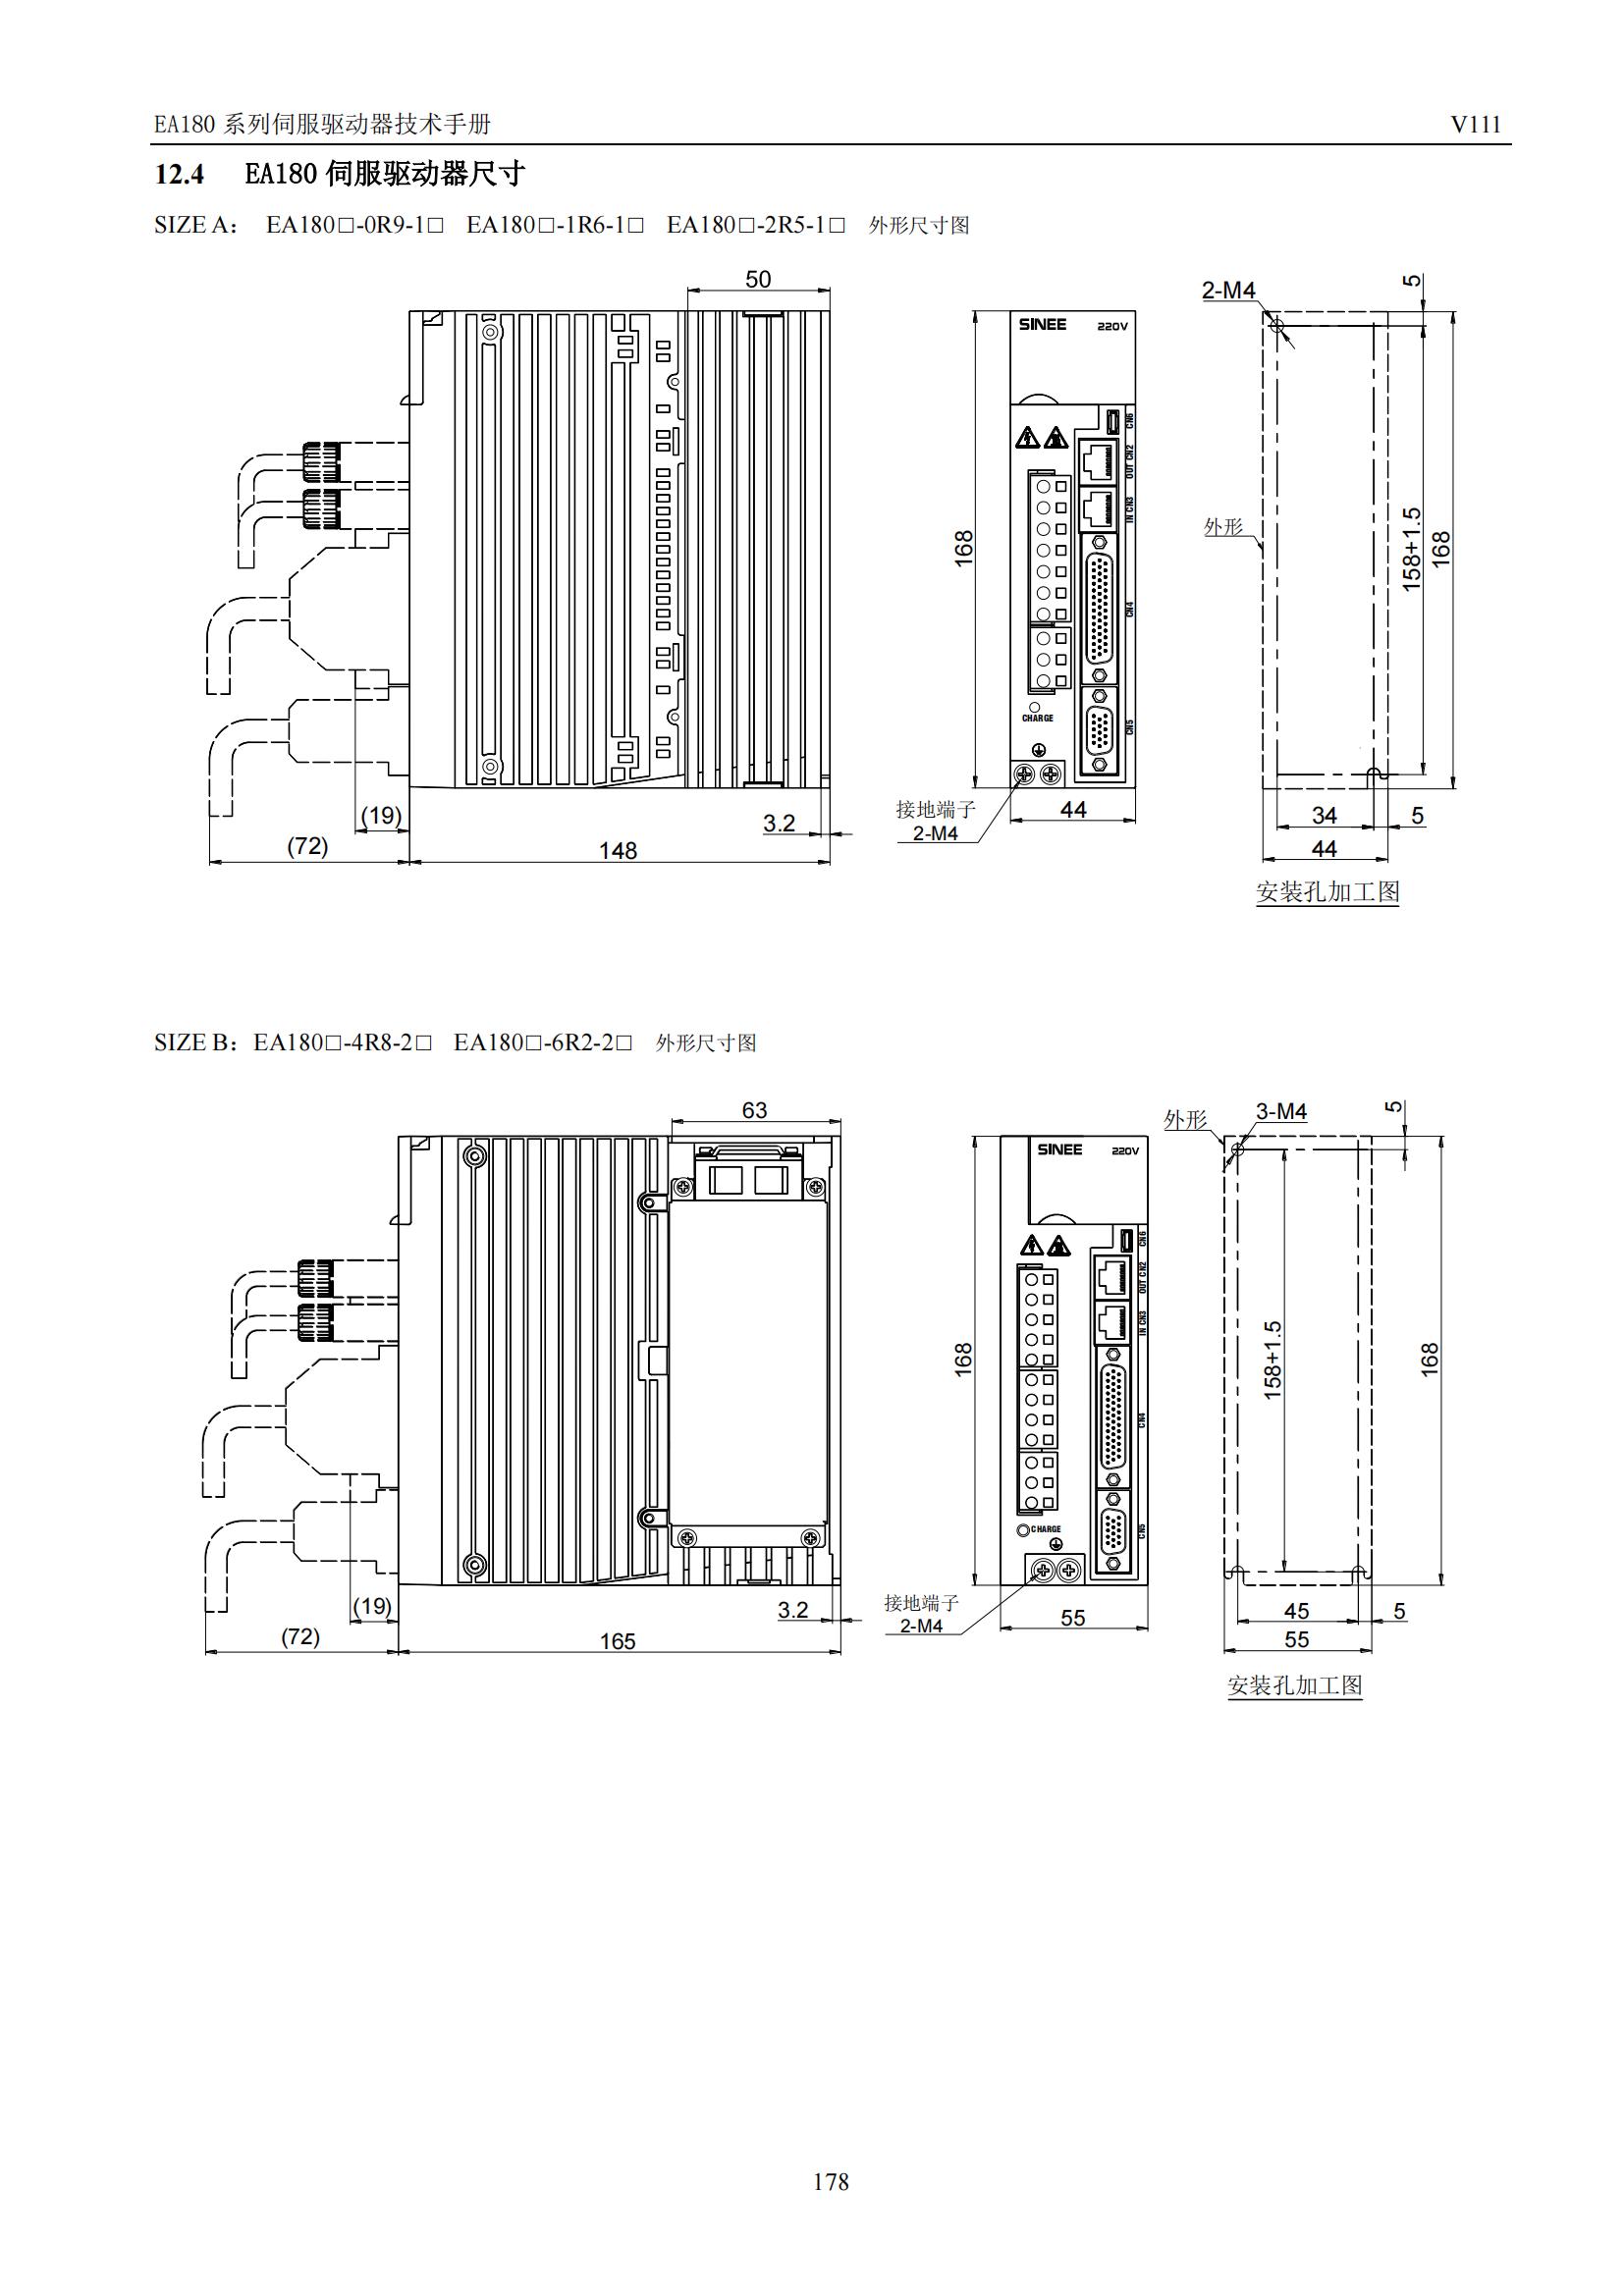 EA180系列模拟量脉冲型伺服驱动器技术手册 V111_01.jpg